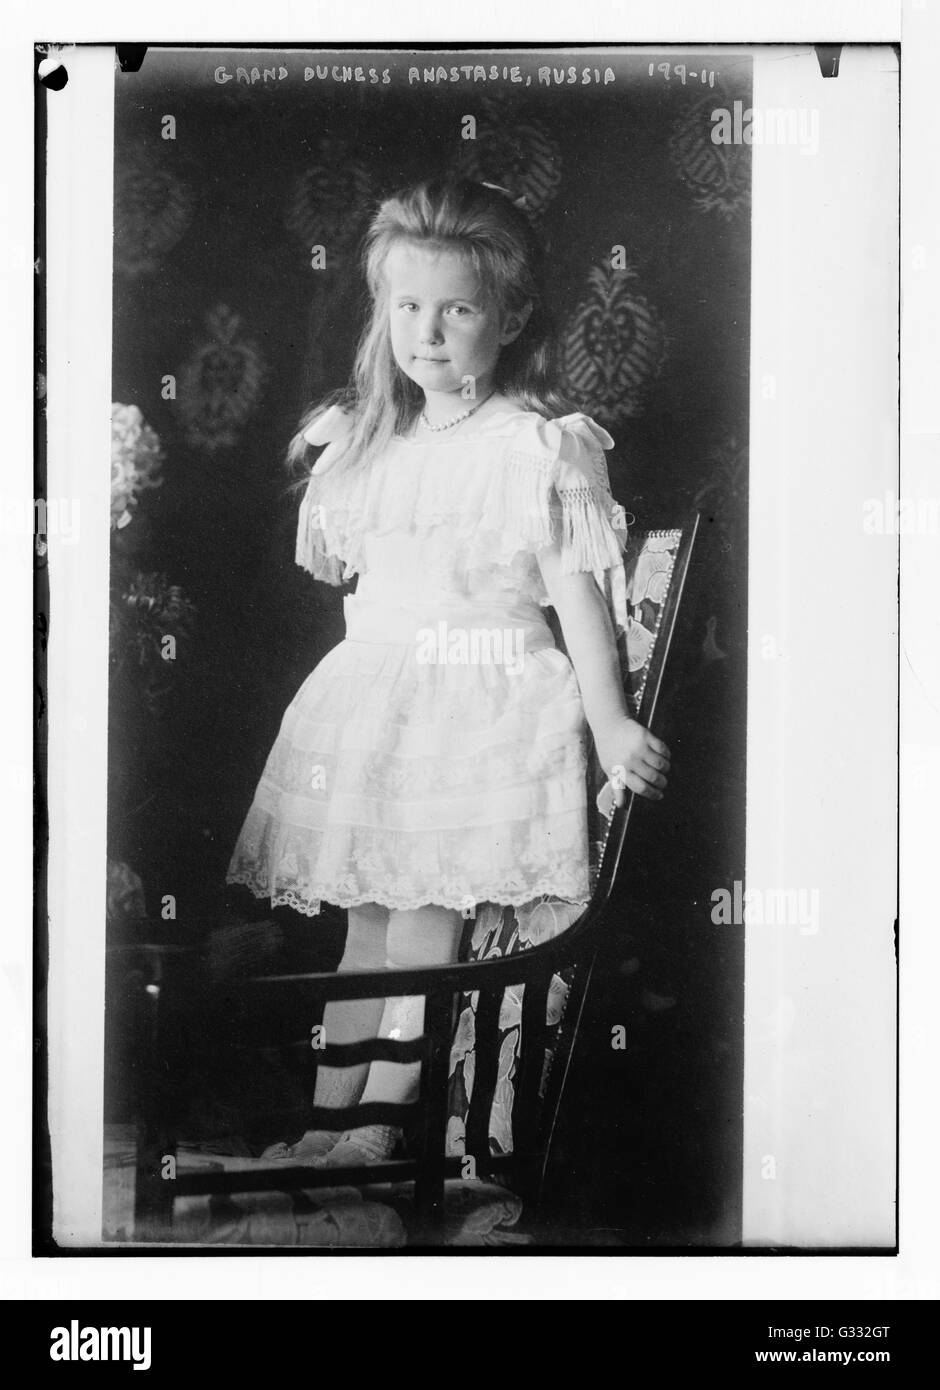 La granduchessa Anastasia Nikolaevna (1901-1917) era la quarta figlia dello Zar Nikolas e Tsarina Alexandra della Russia. Foto Stock